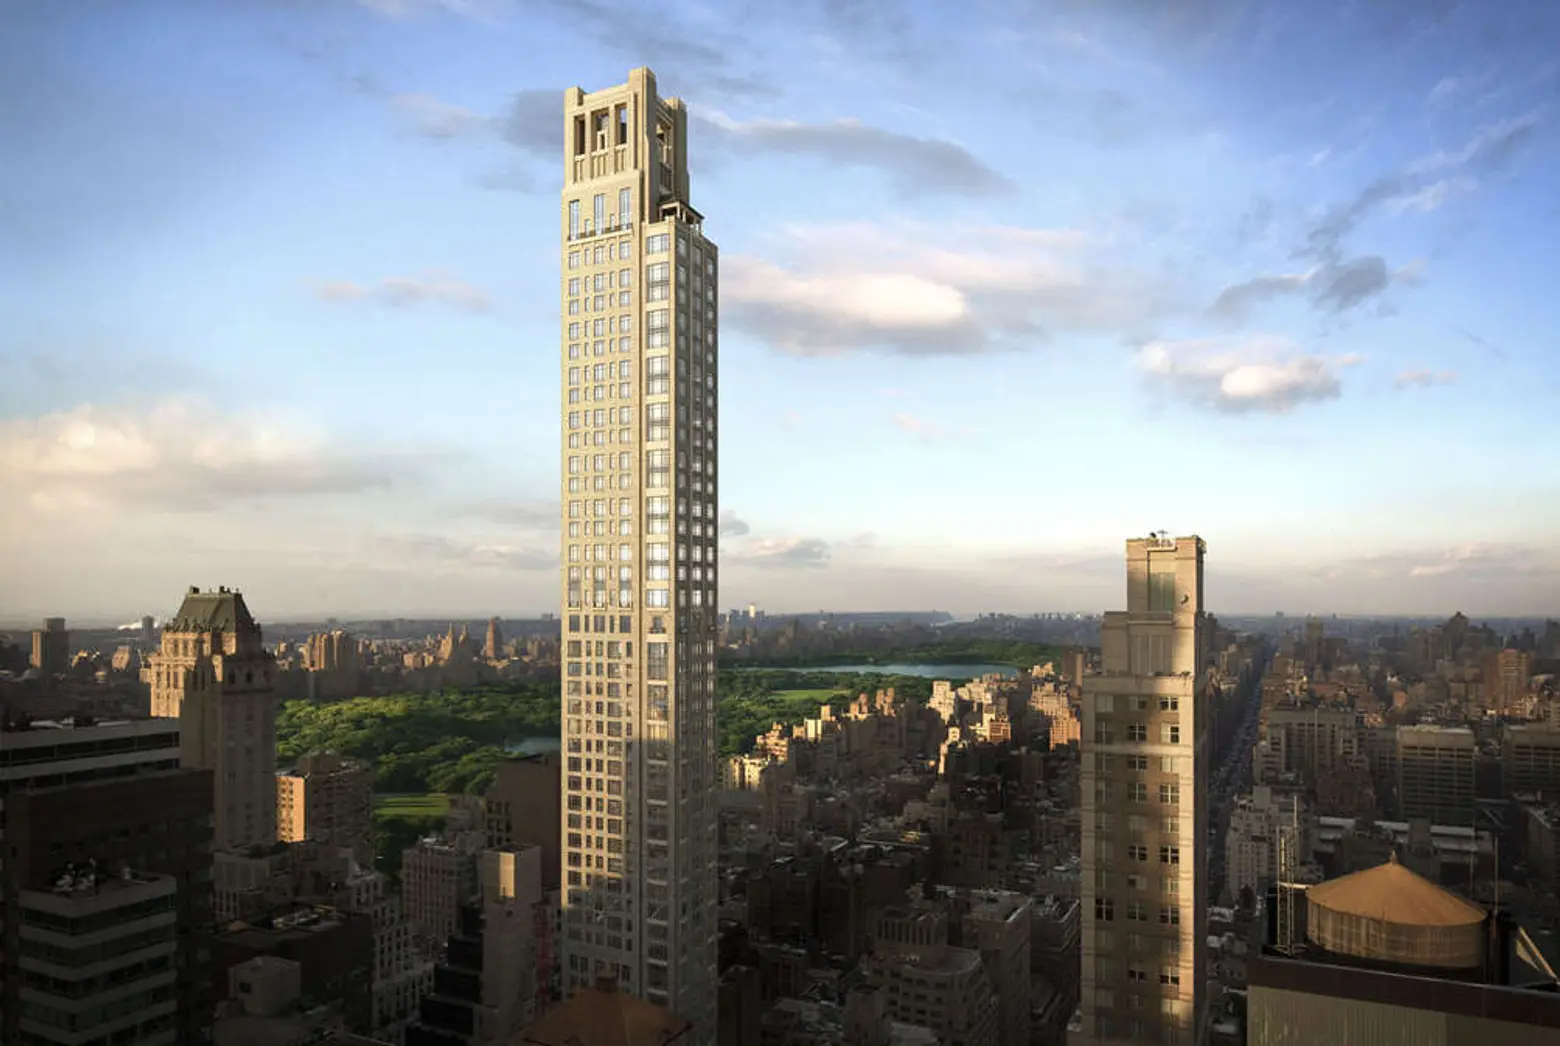 520 Park Avenue, Zeckendorf, Robert A.M. Stern, Upper East Side, tallest building, skyscraper, condos